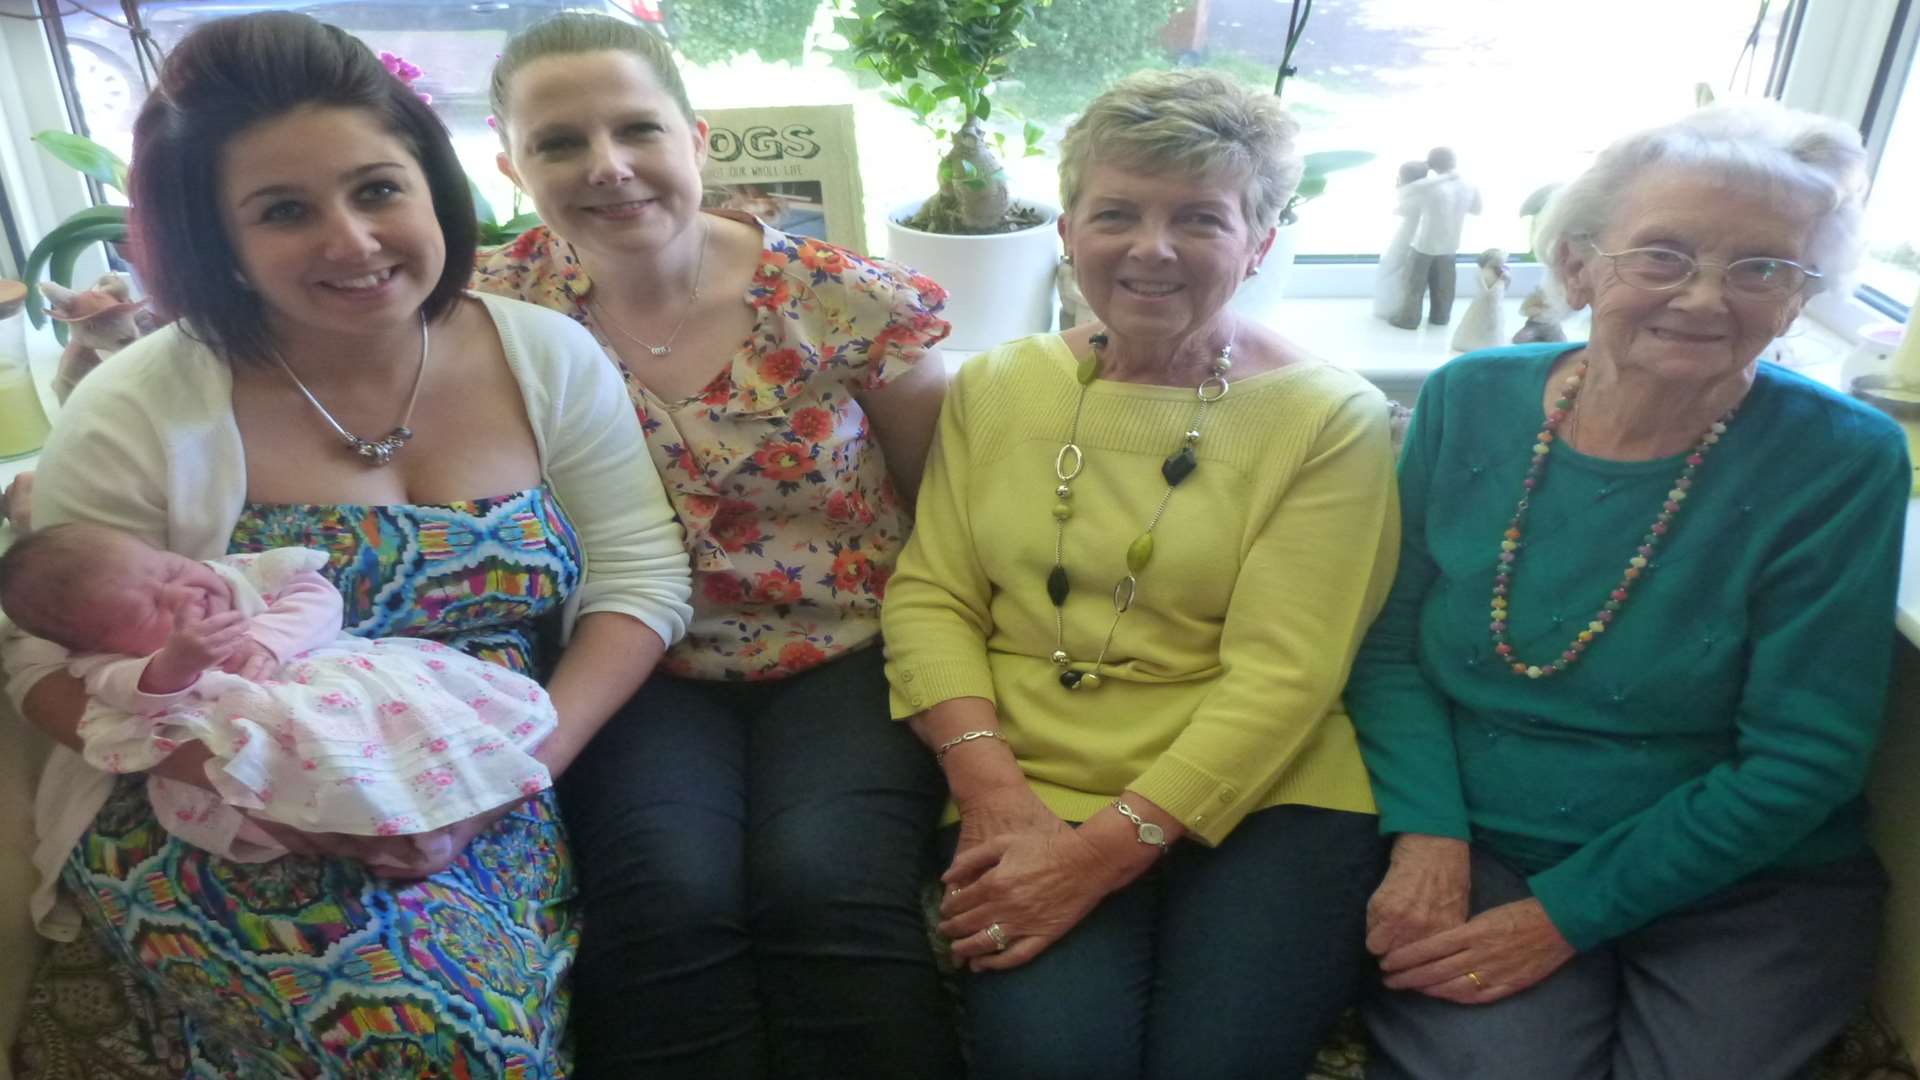 Five generations - Ellie, Jade, Helen, Barbara and Doris